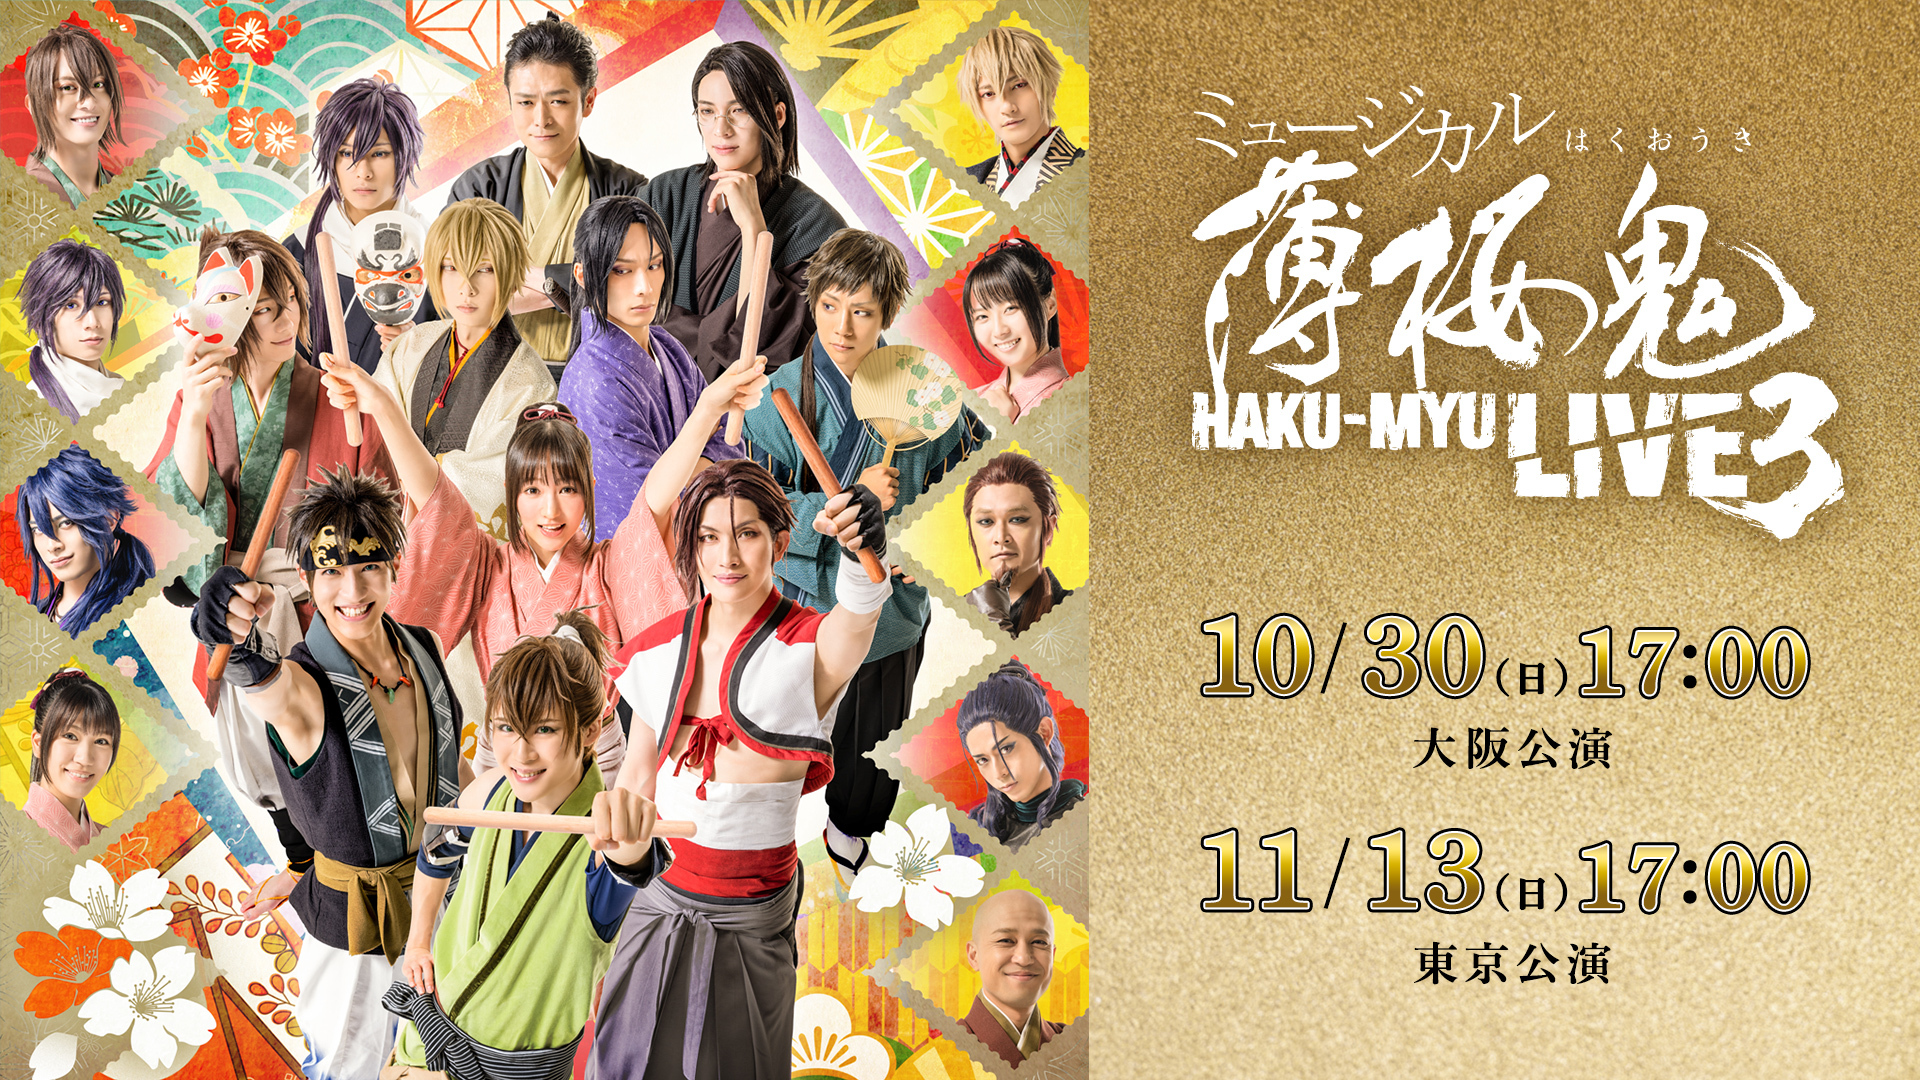 Blu-ray】ミュージカル『薄桜鬼』HAKU-MYU LIVE 3 | hartwellspremium.com